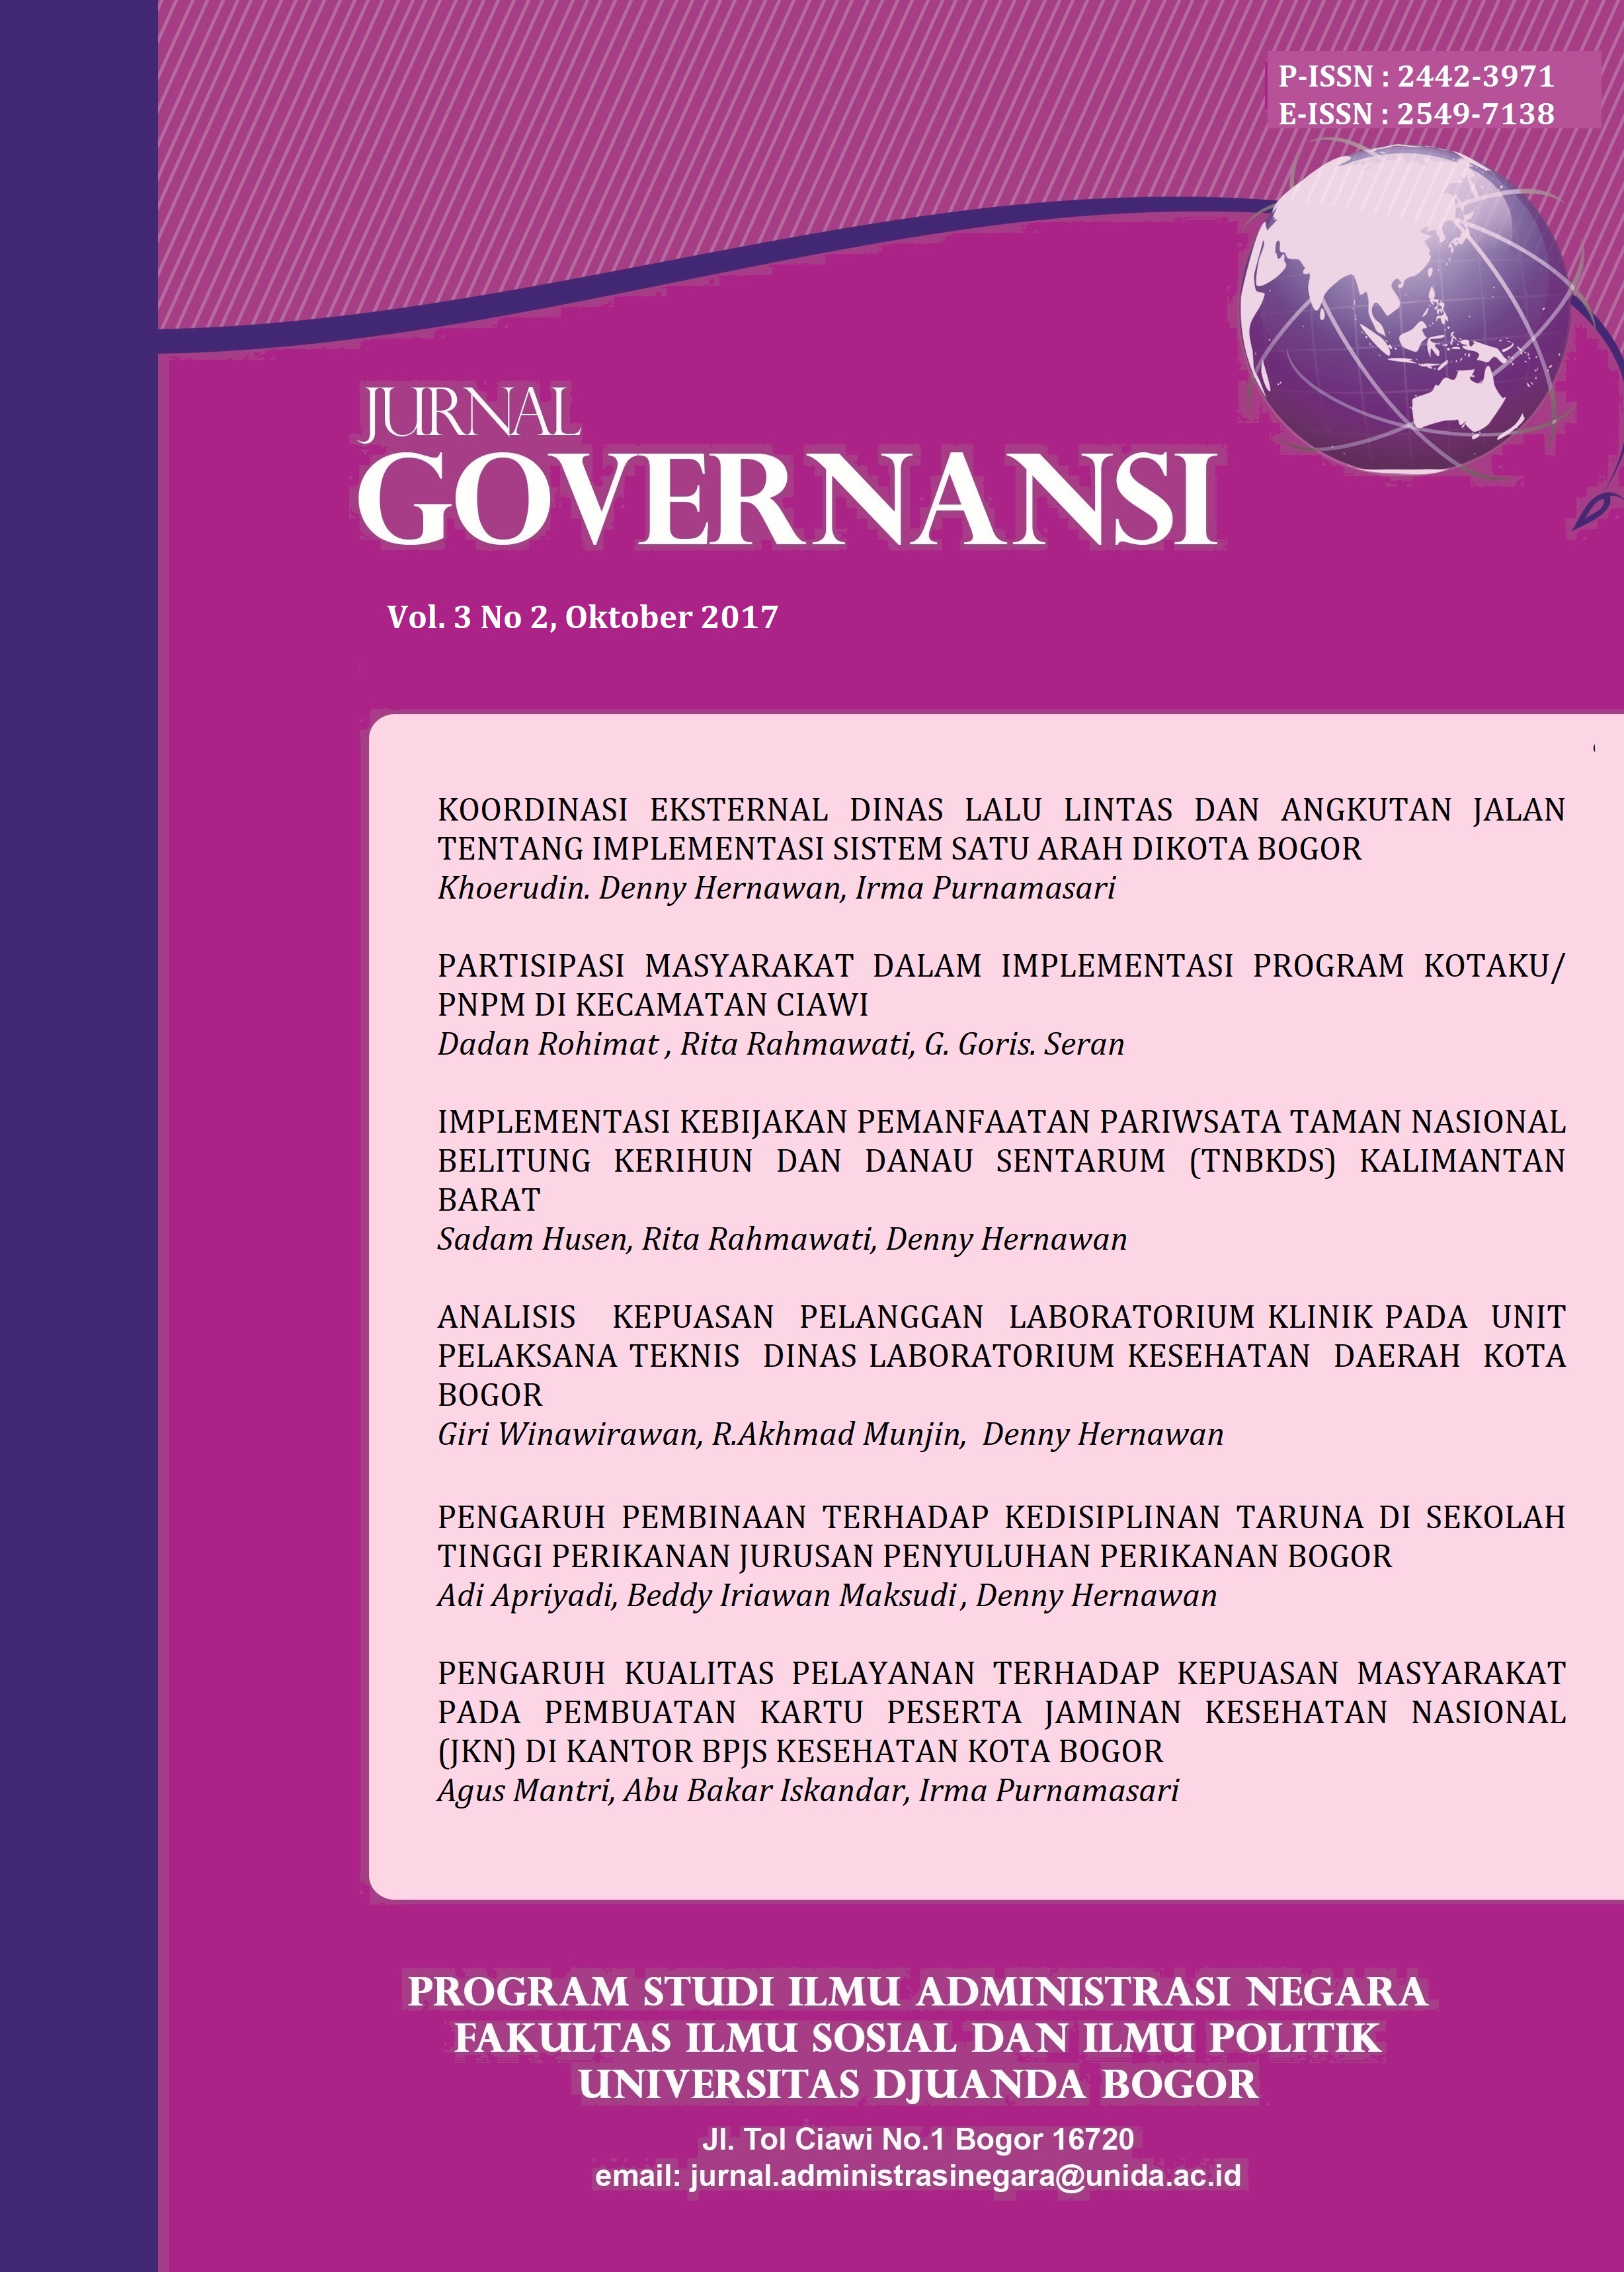 					View Vol. 3 No. 2 (2017): JURNAL GOVERNANSI Vol 3 No 2, OKTOBER 2017
				